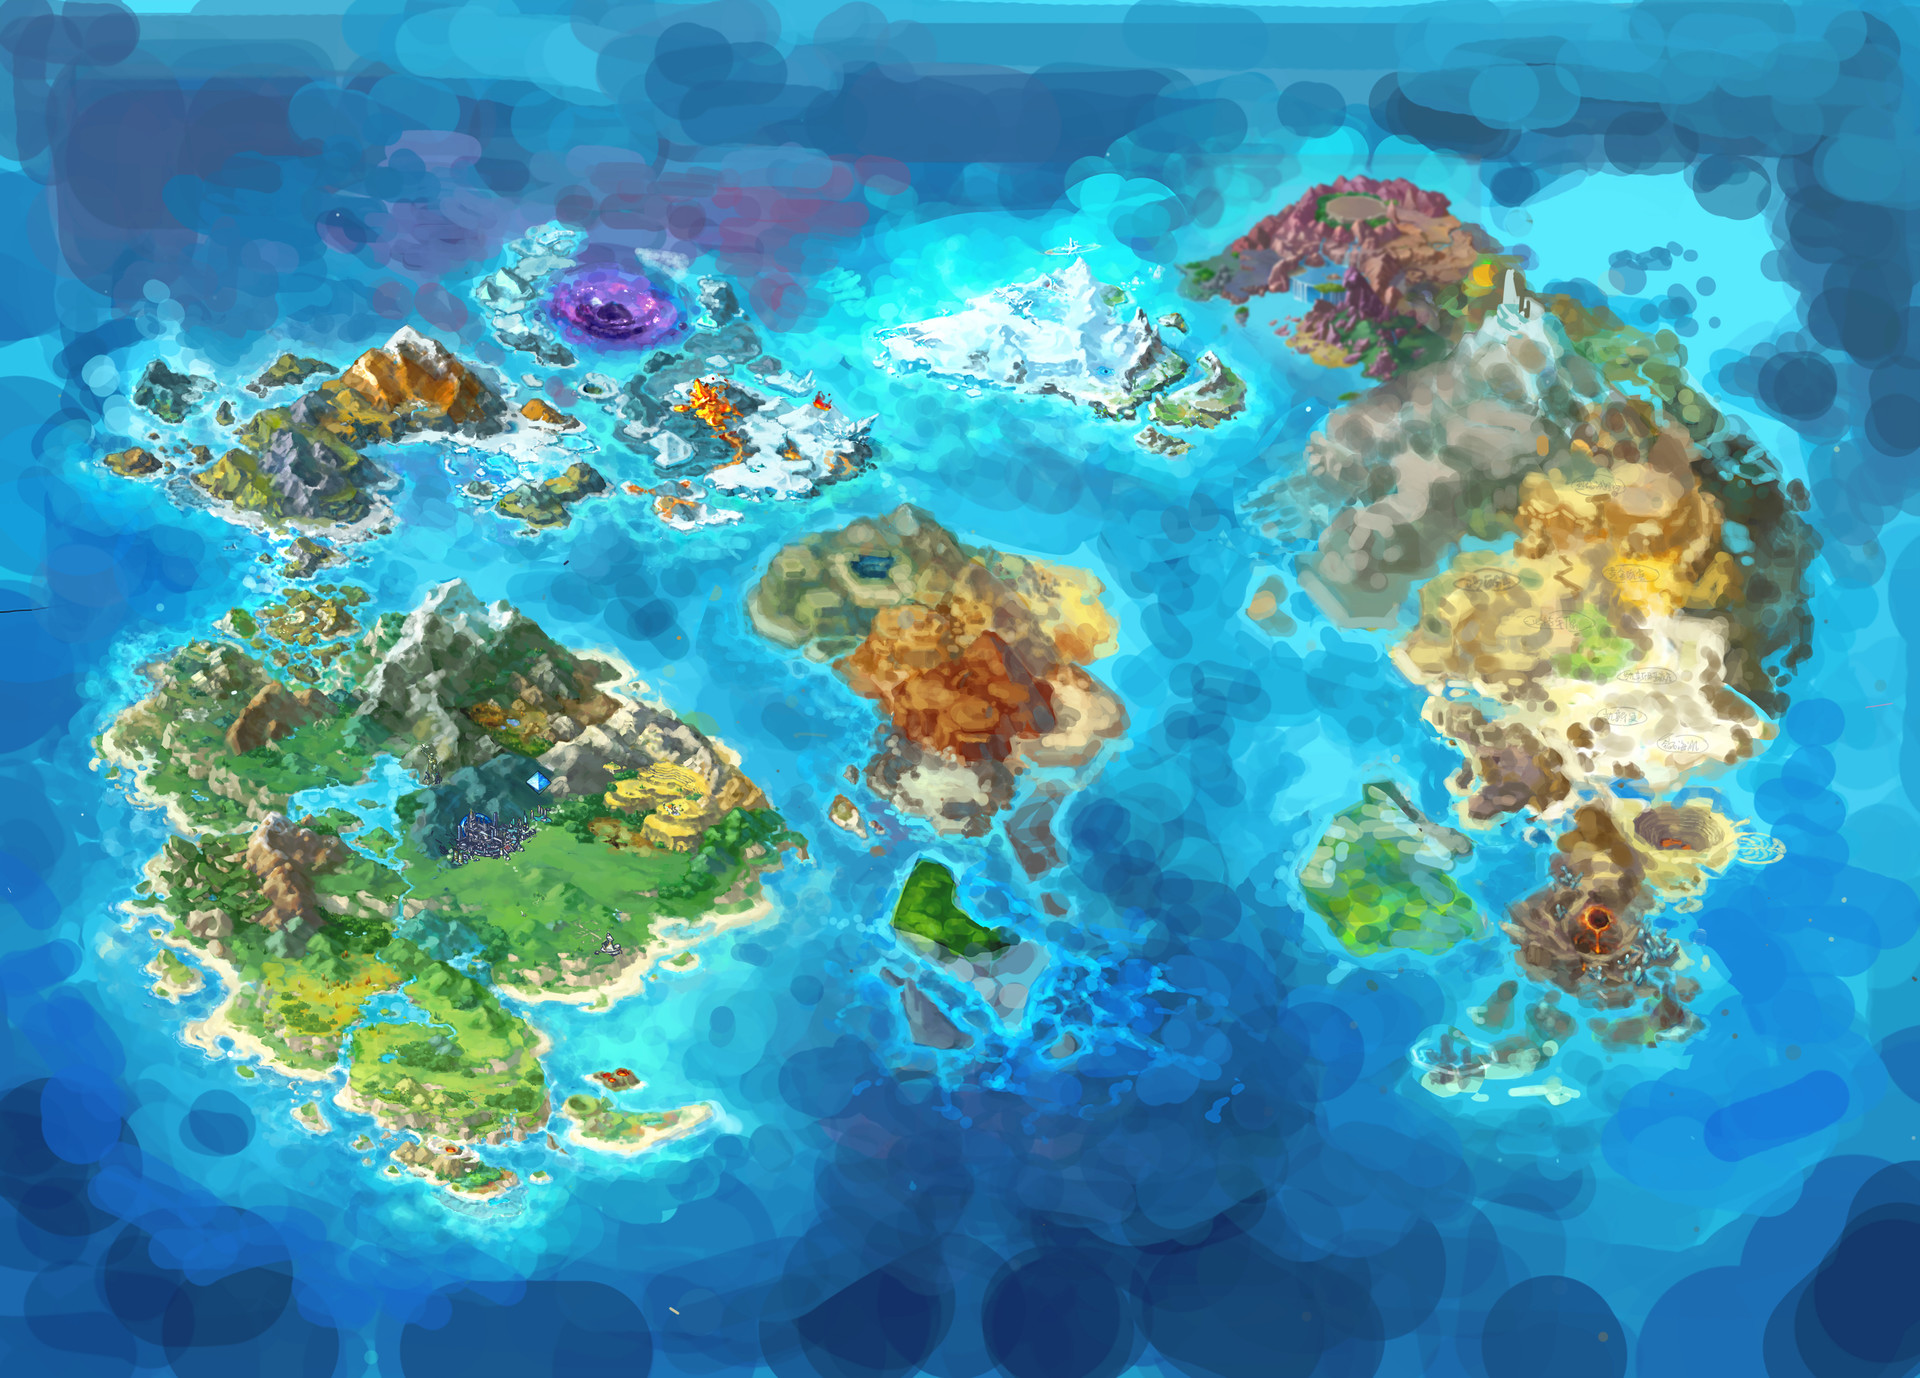 ArtStation - Map of the world